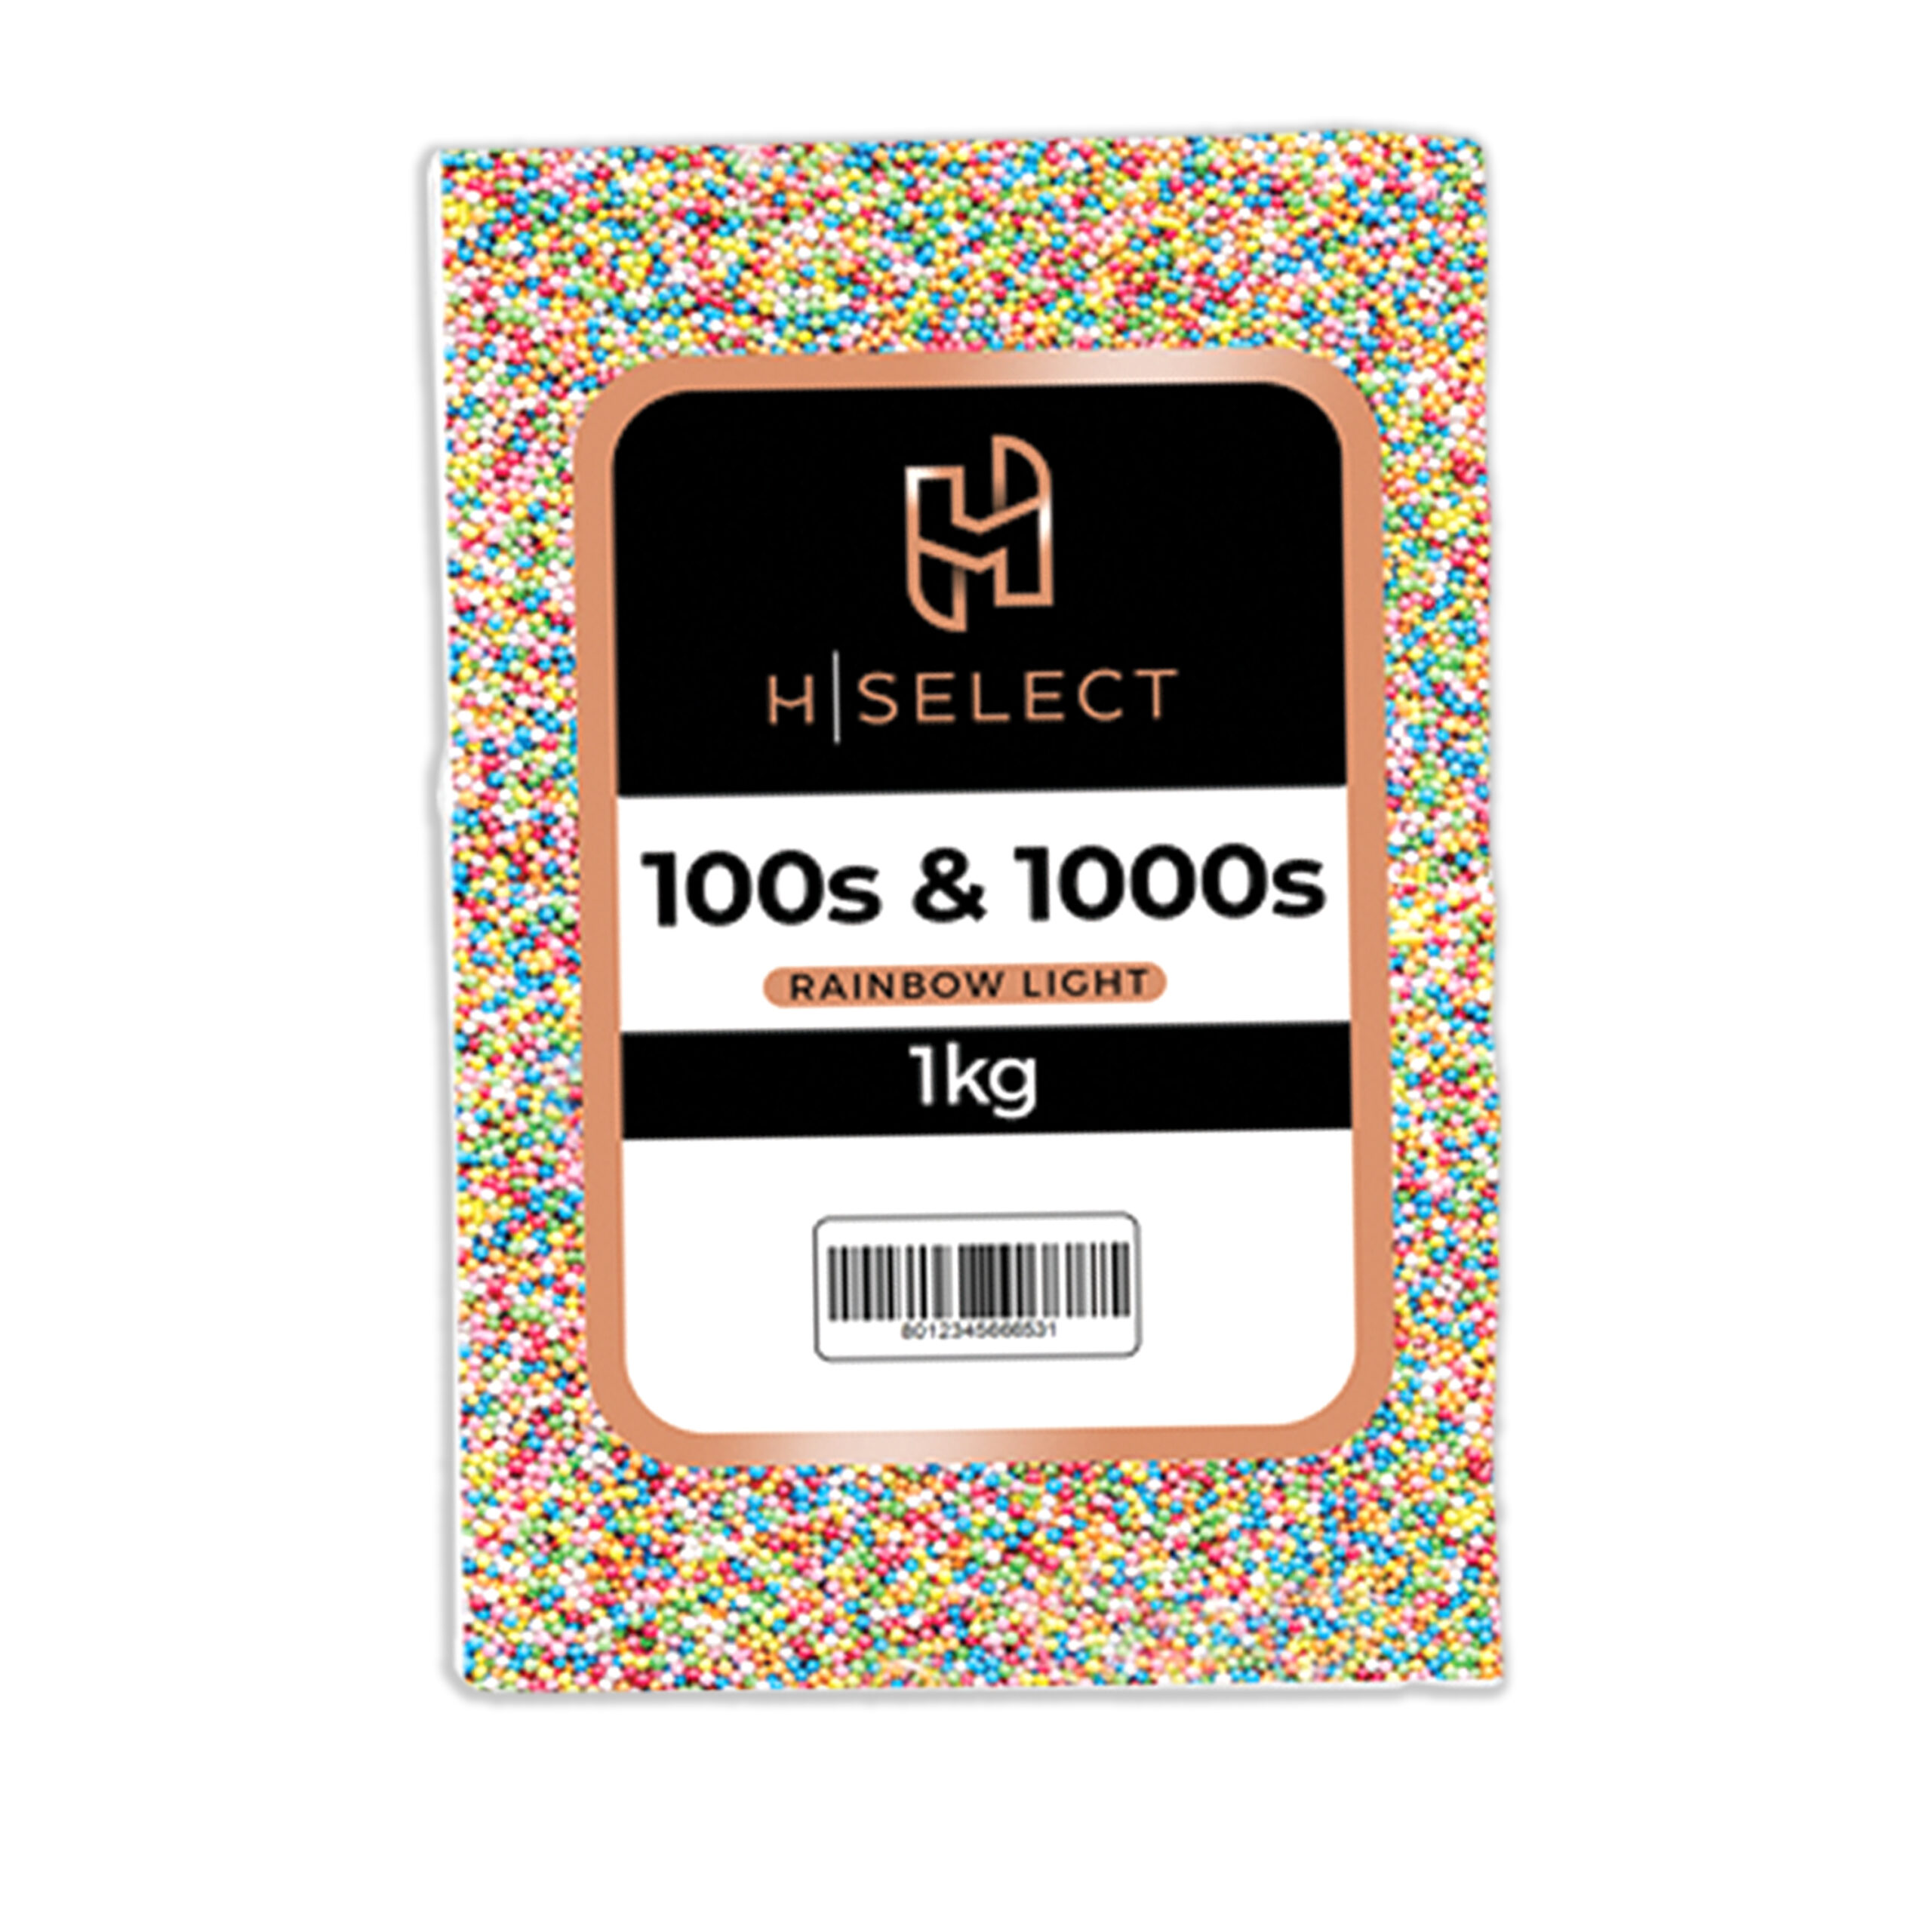 H-SELECT 100s &
1000s 1kg
RAINBOW LIGHT